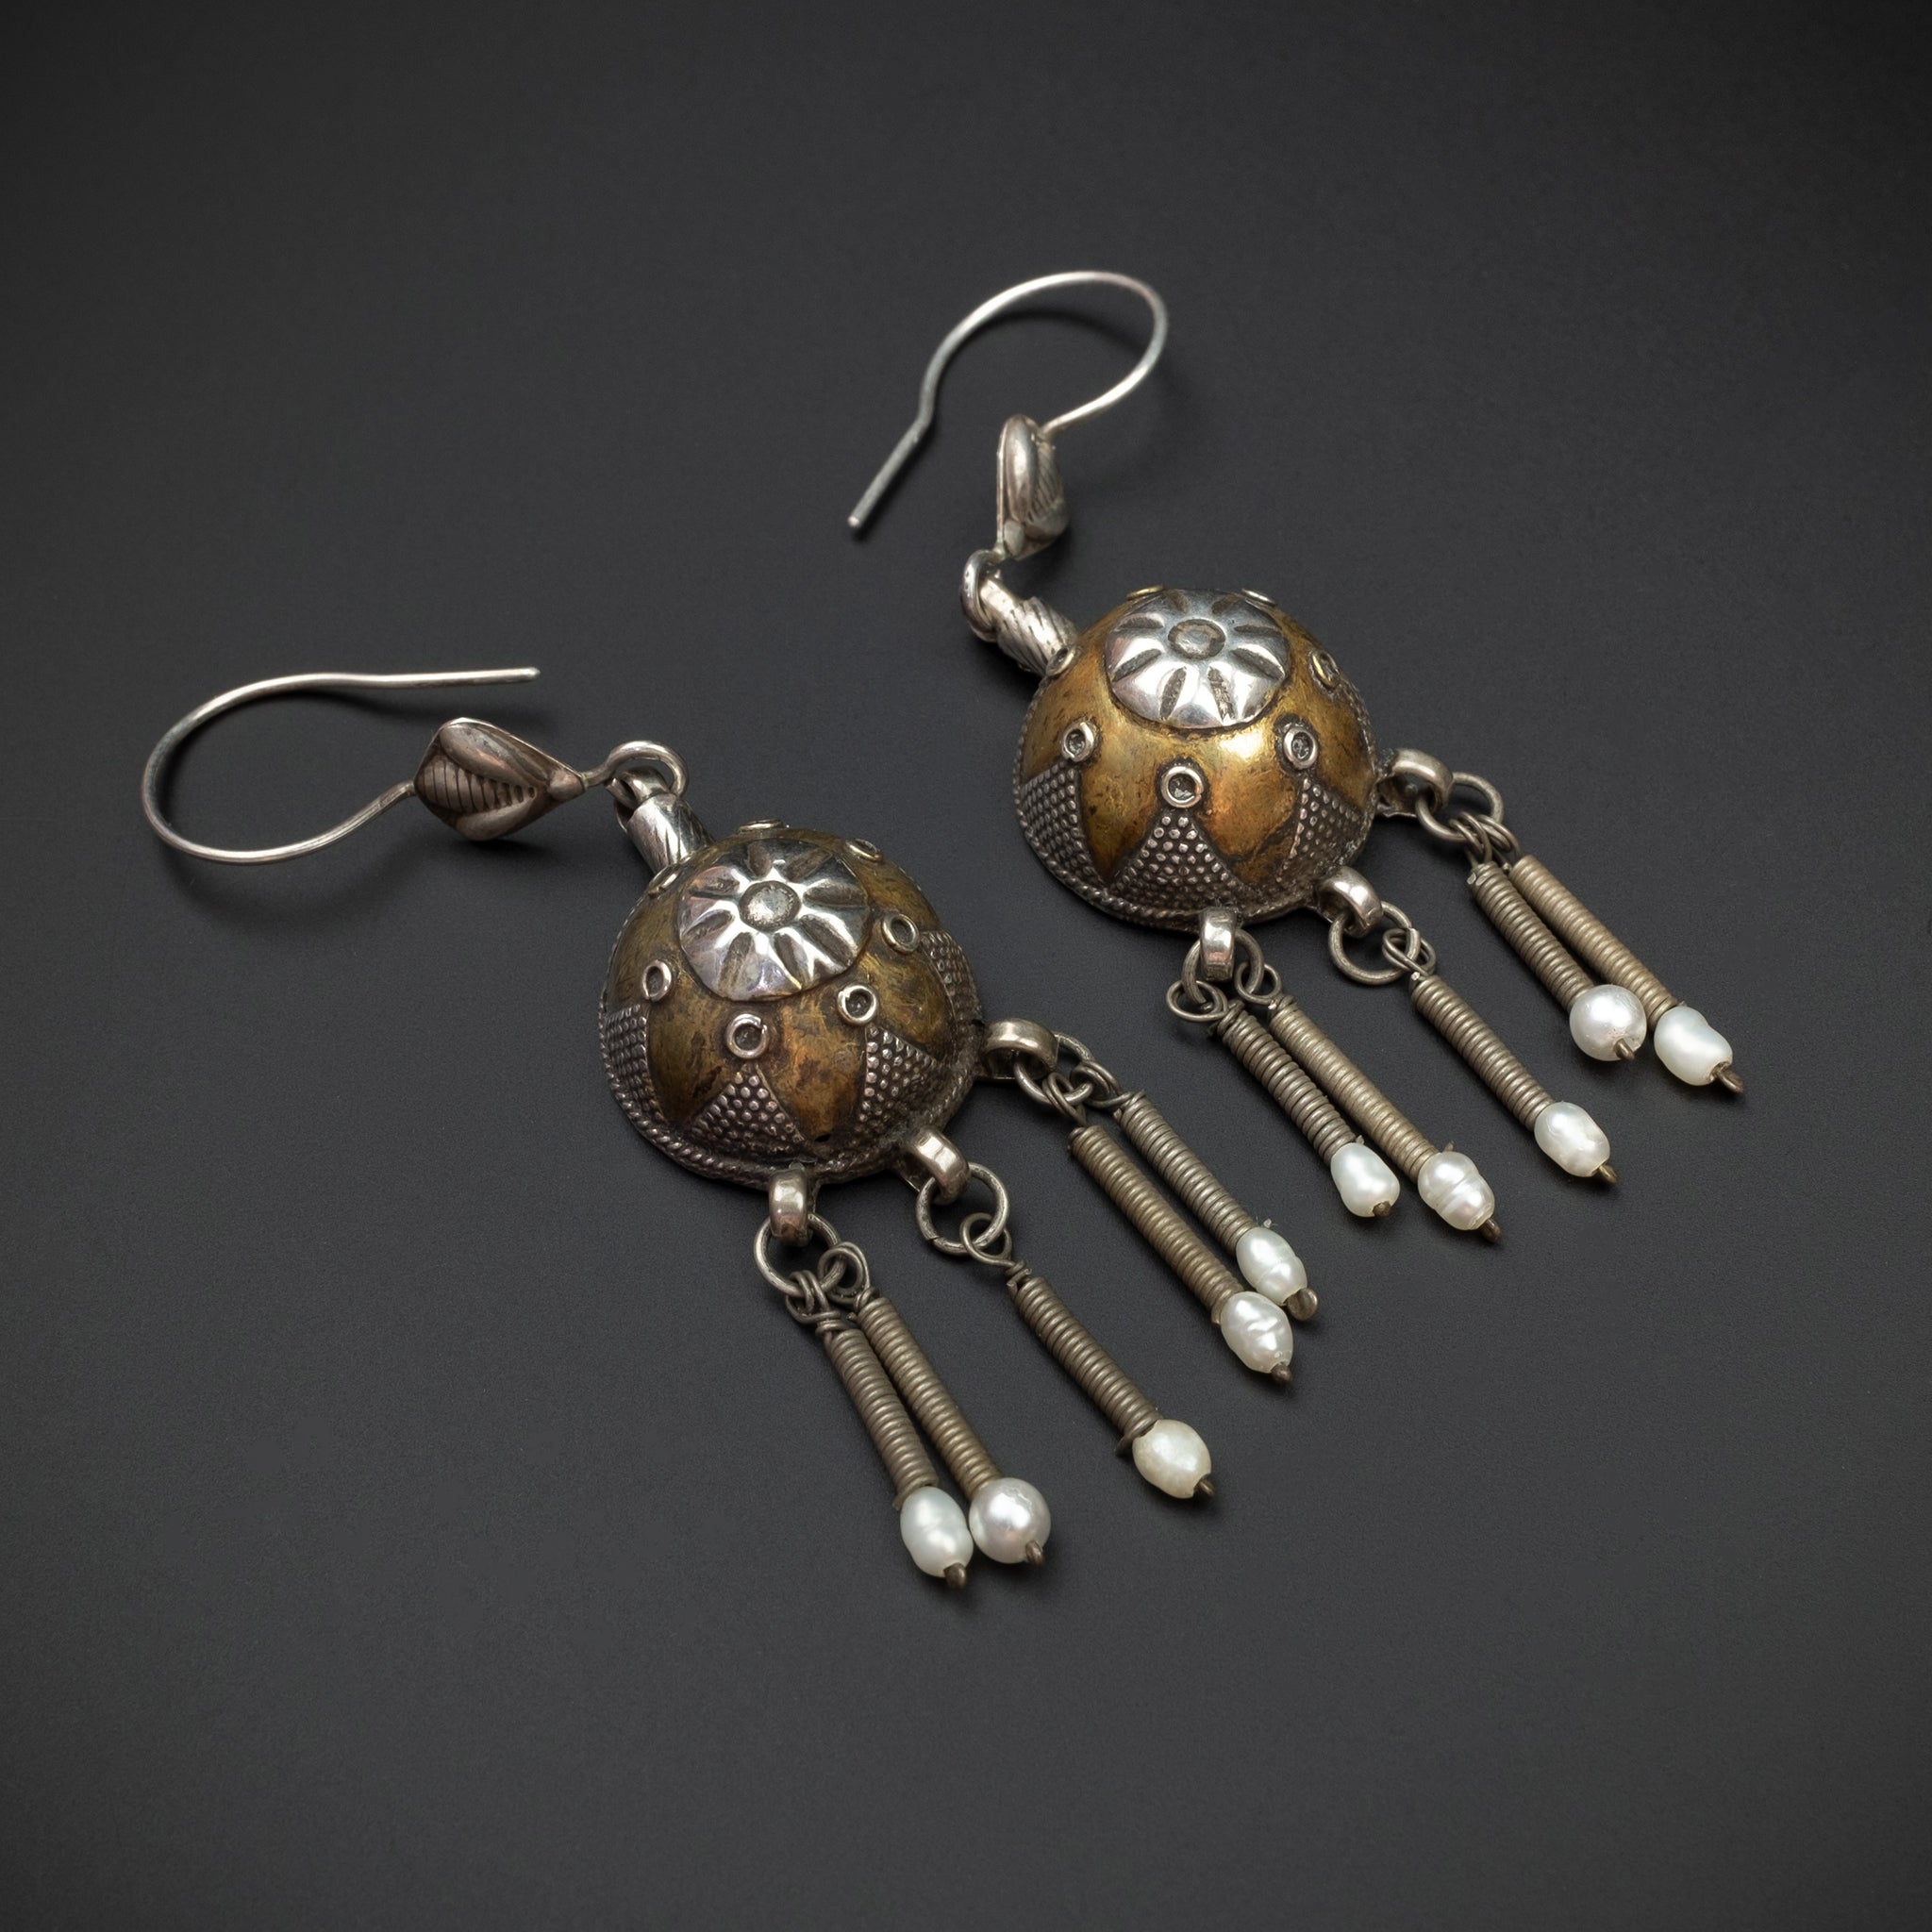 Vintage Silver Kazakh Earrings